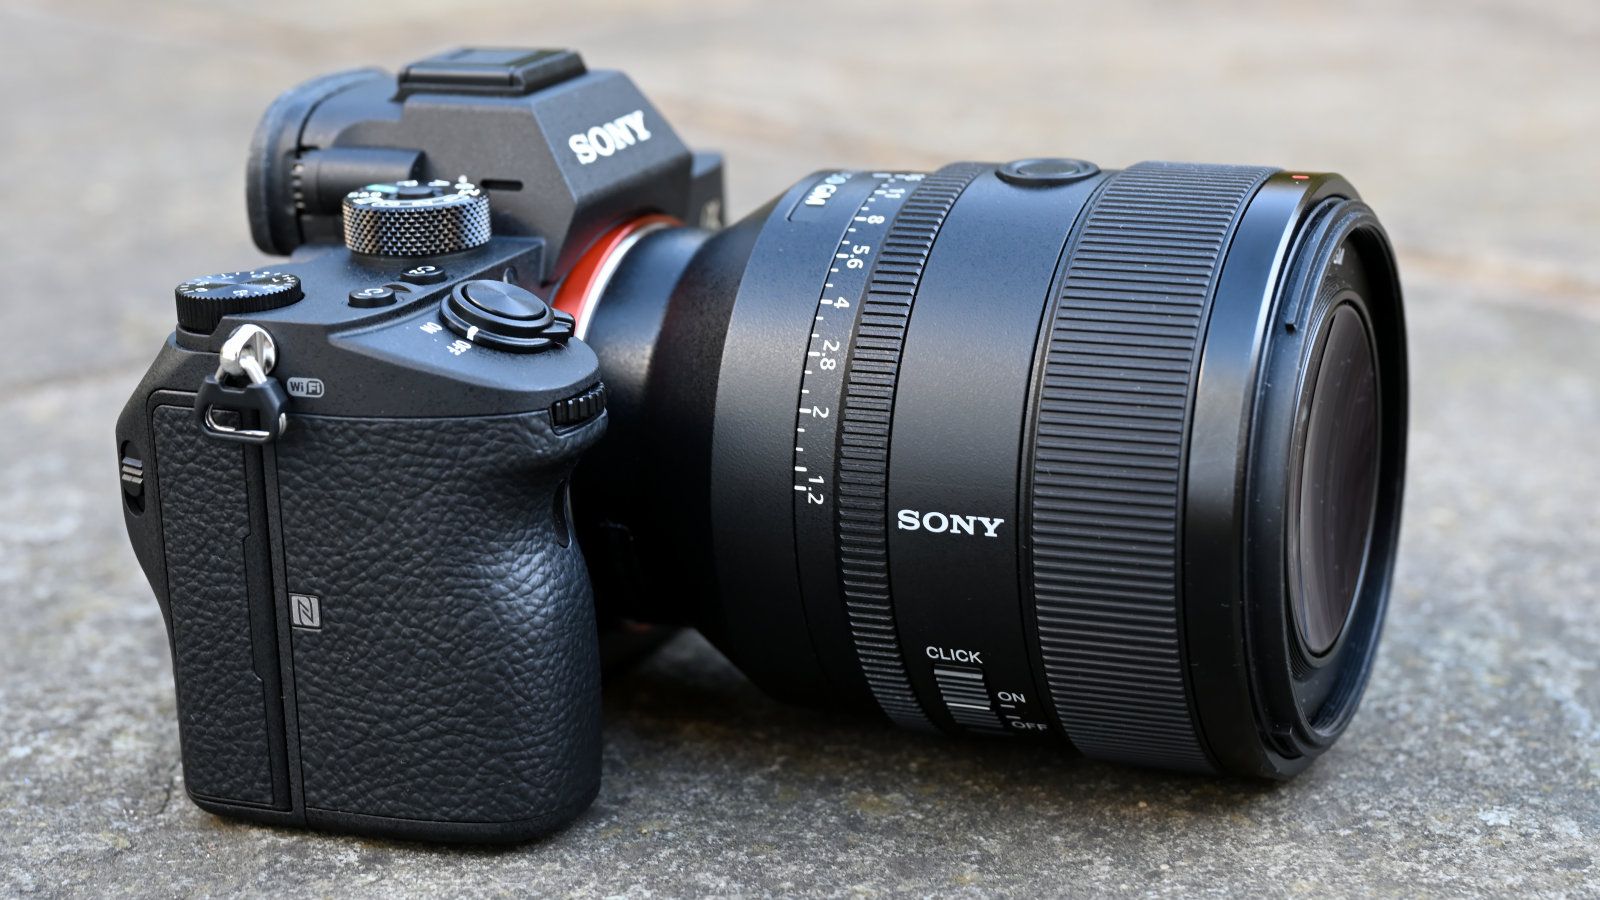 Sony 50mm купить. Sony Fe 50mm f1.2 GM. Sony 50 1.2 GM. Sony 50mm 1.2 GM. Sony 50mm f1.2 GM.